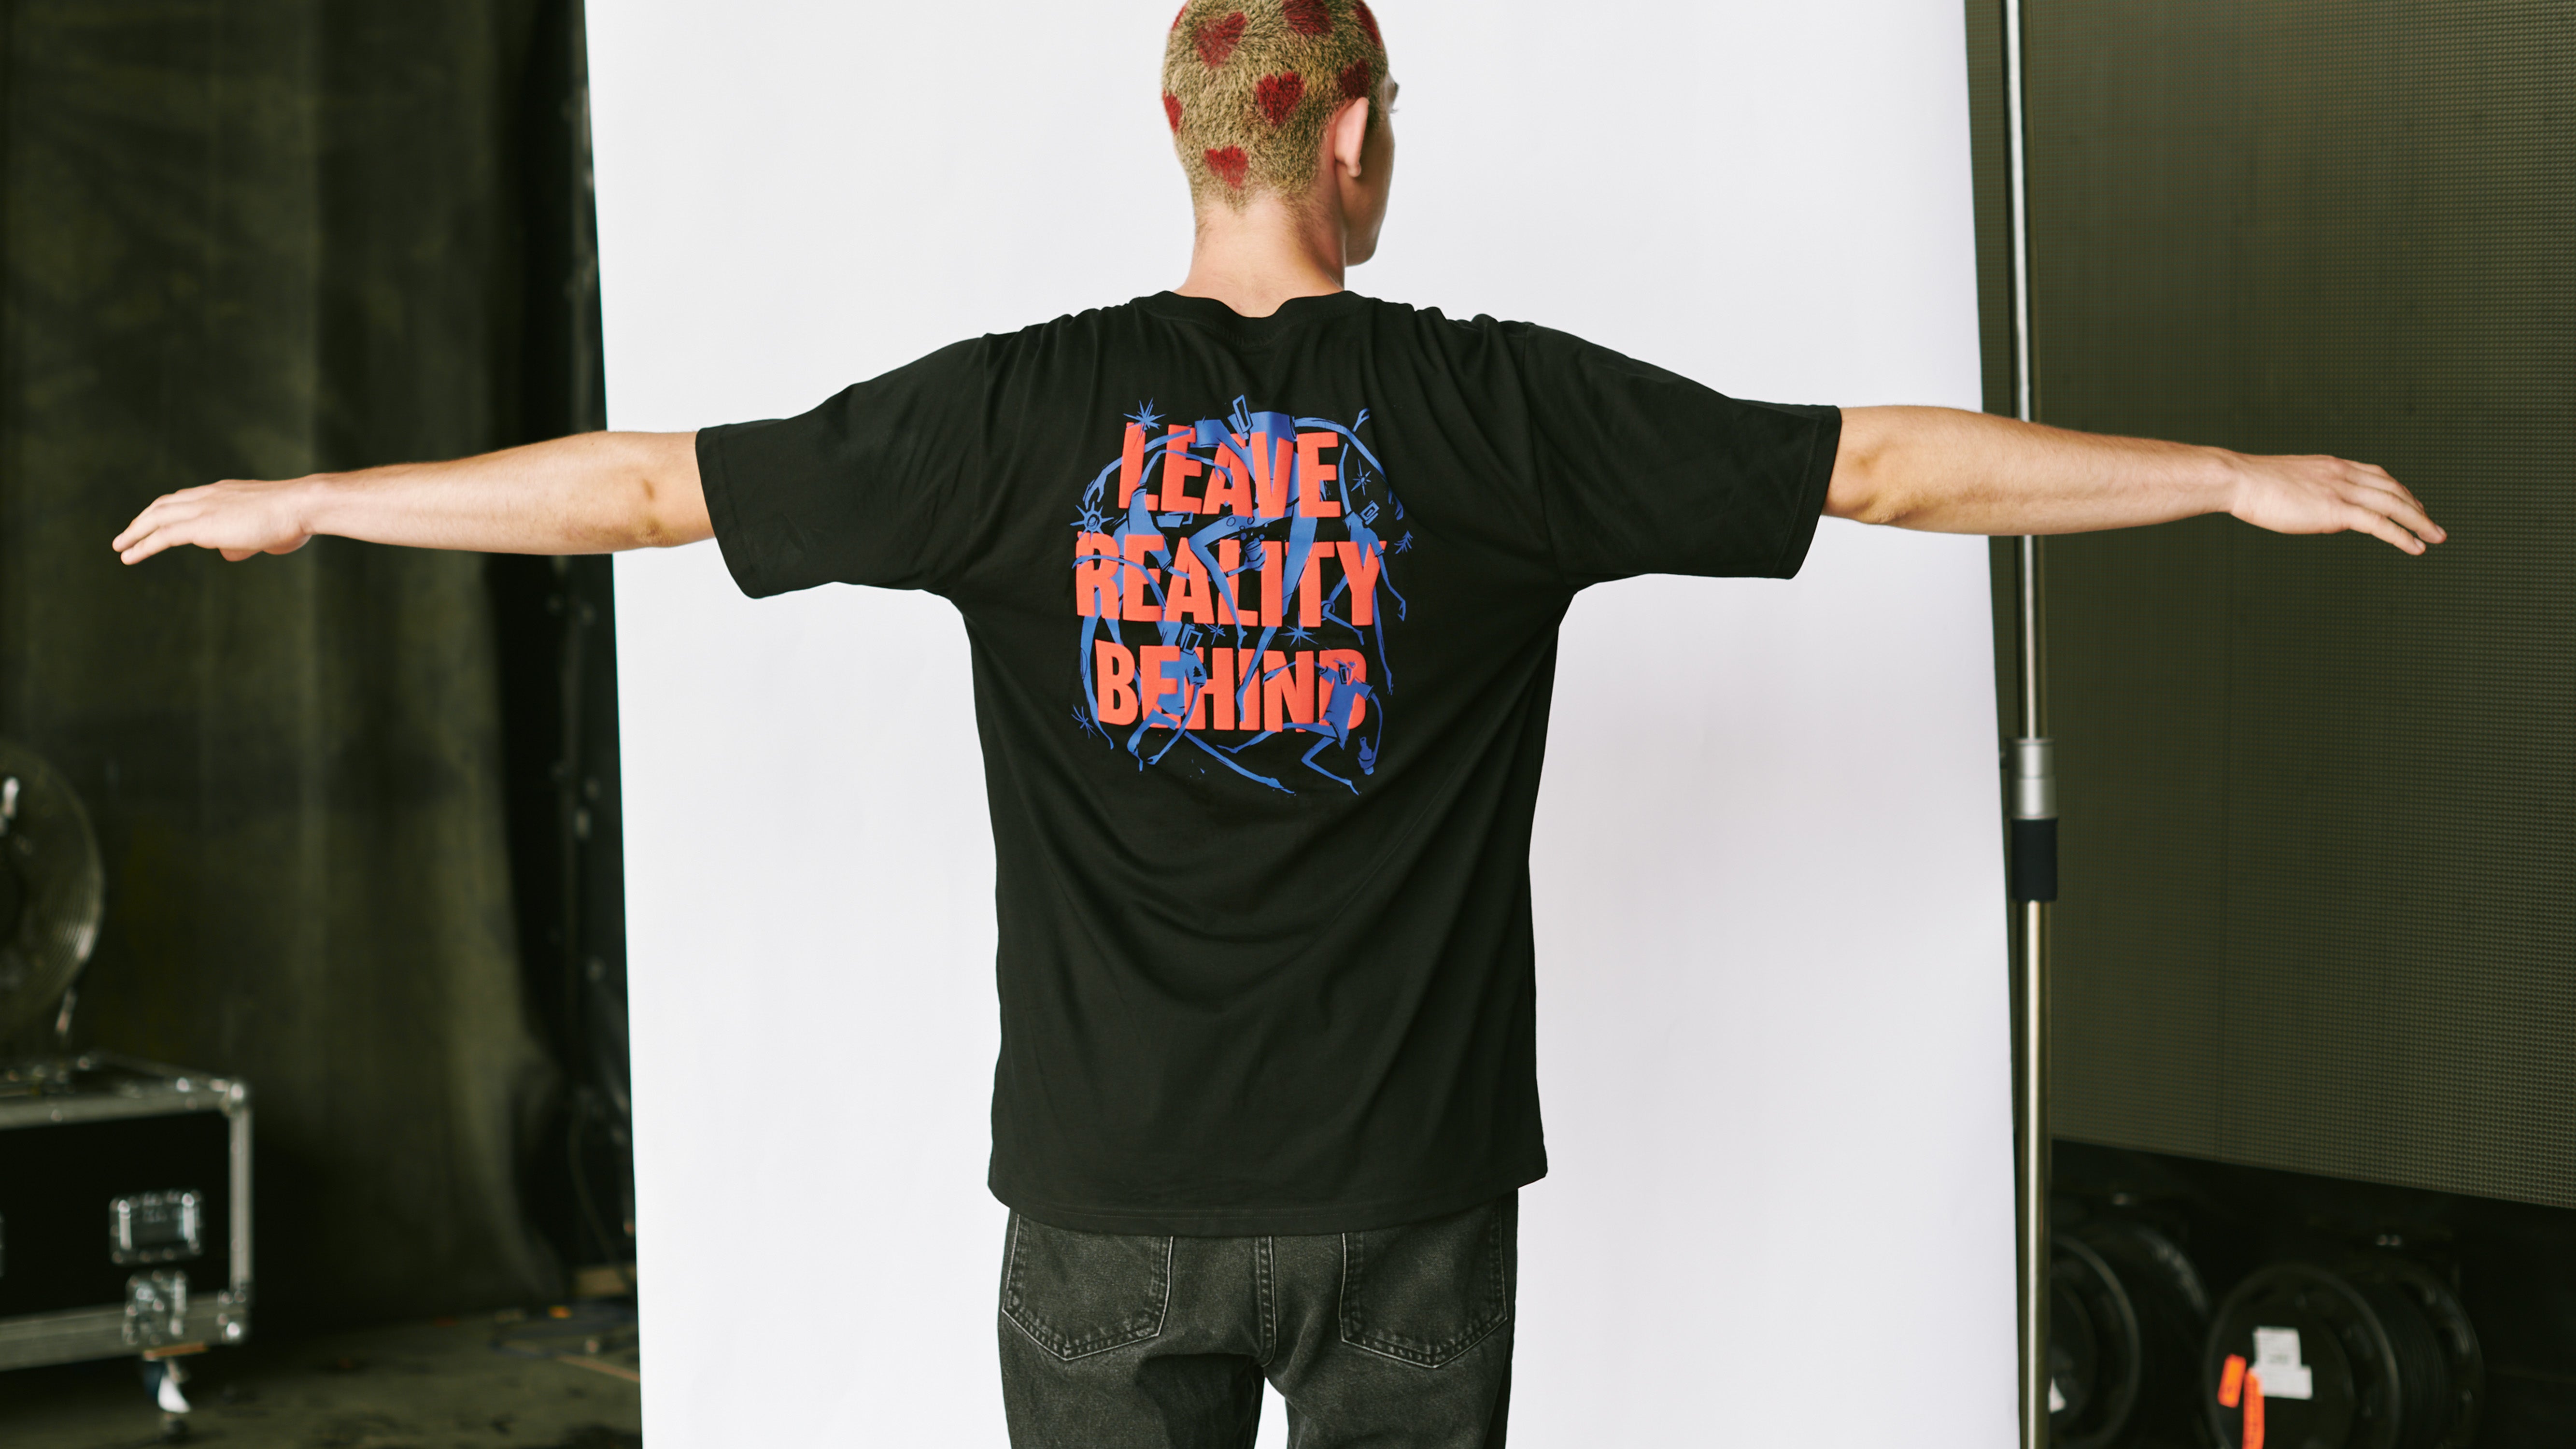 Leave Behind Organic T-Shirt